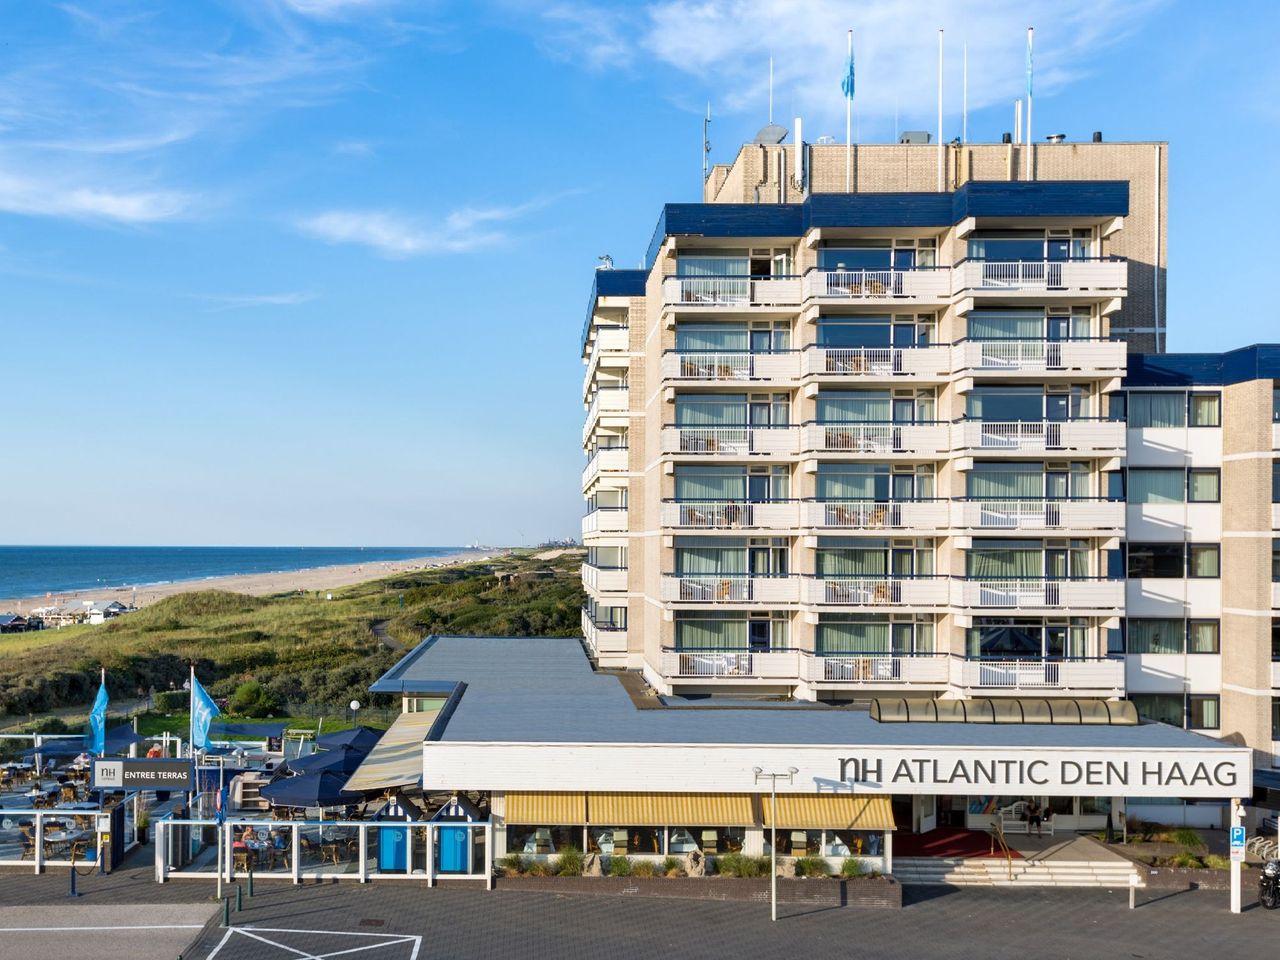 3 Tage im Hotel NH Atlantic Den Haag 